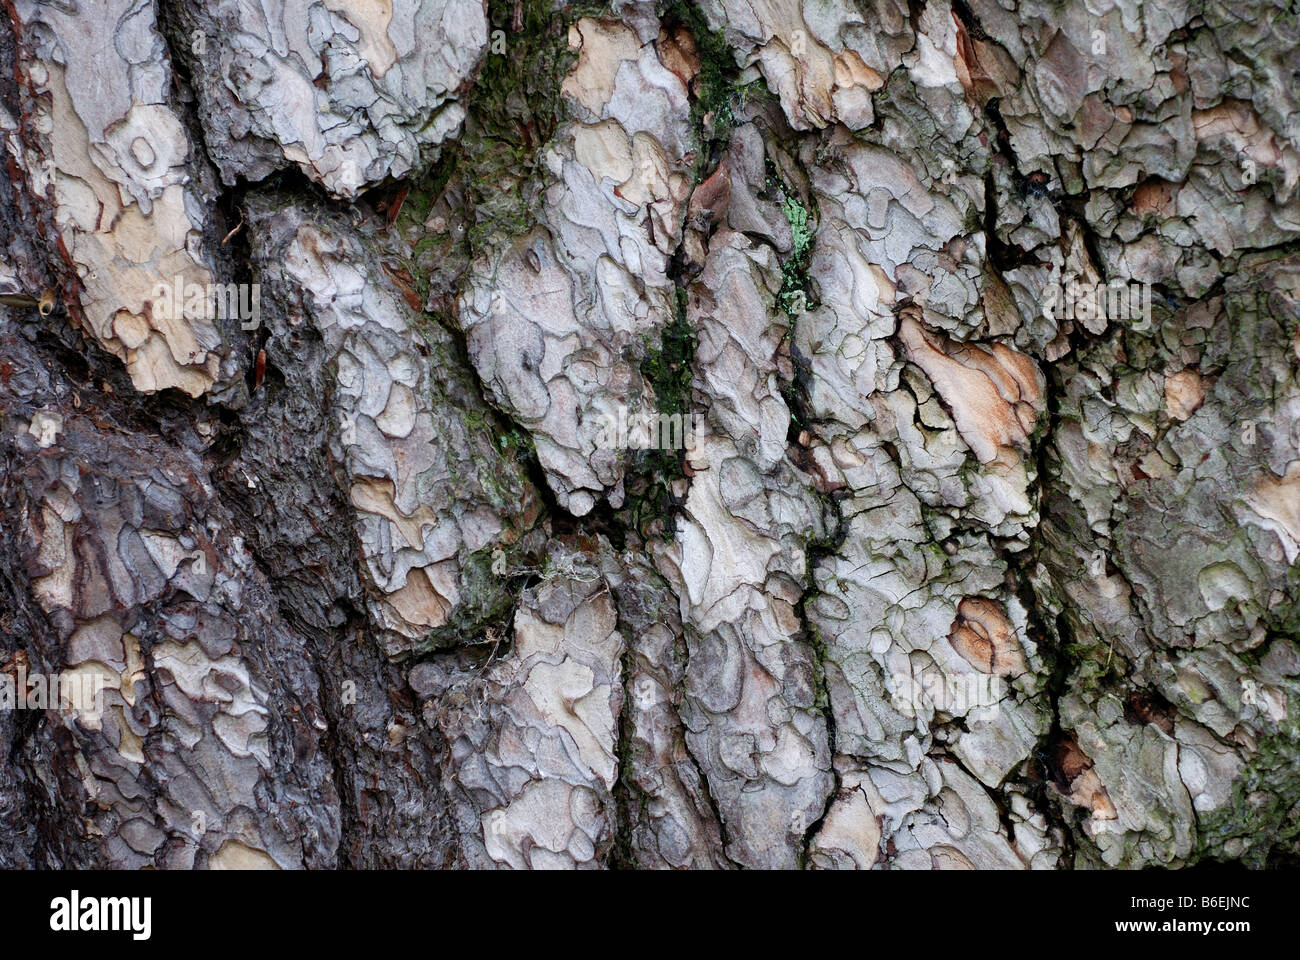 Bark of Pinus nigra tree at Oxford Botanic Garden UK Stock Photo